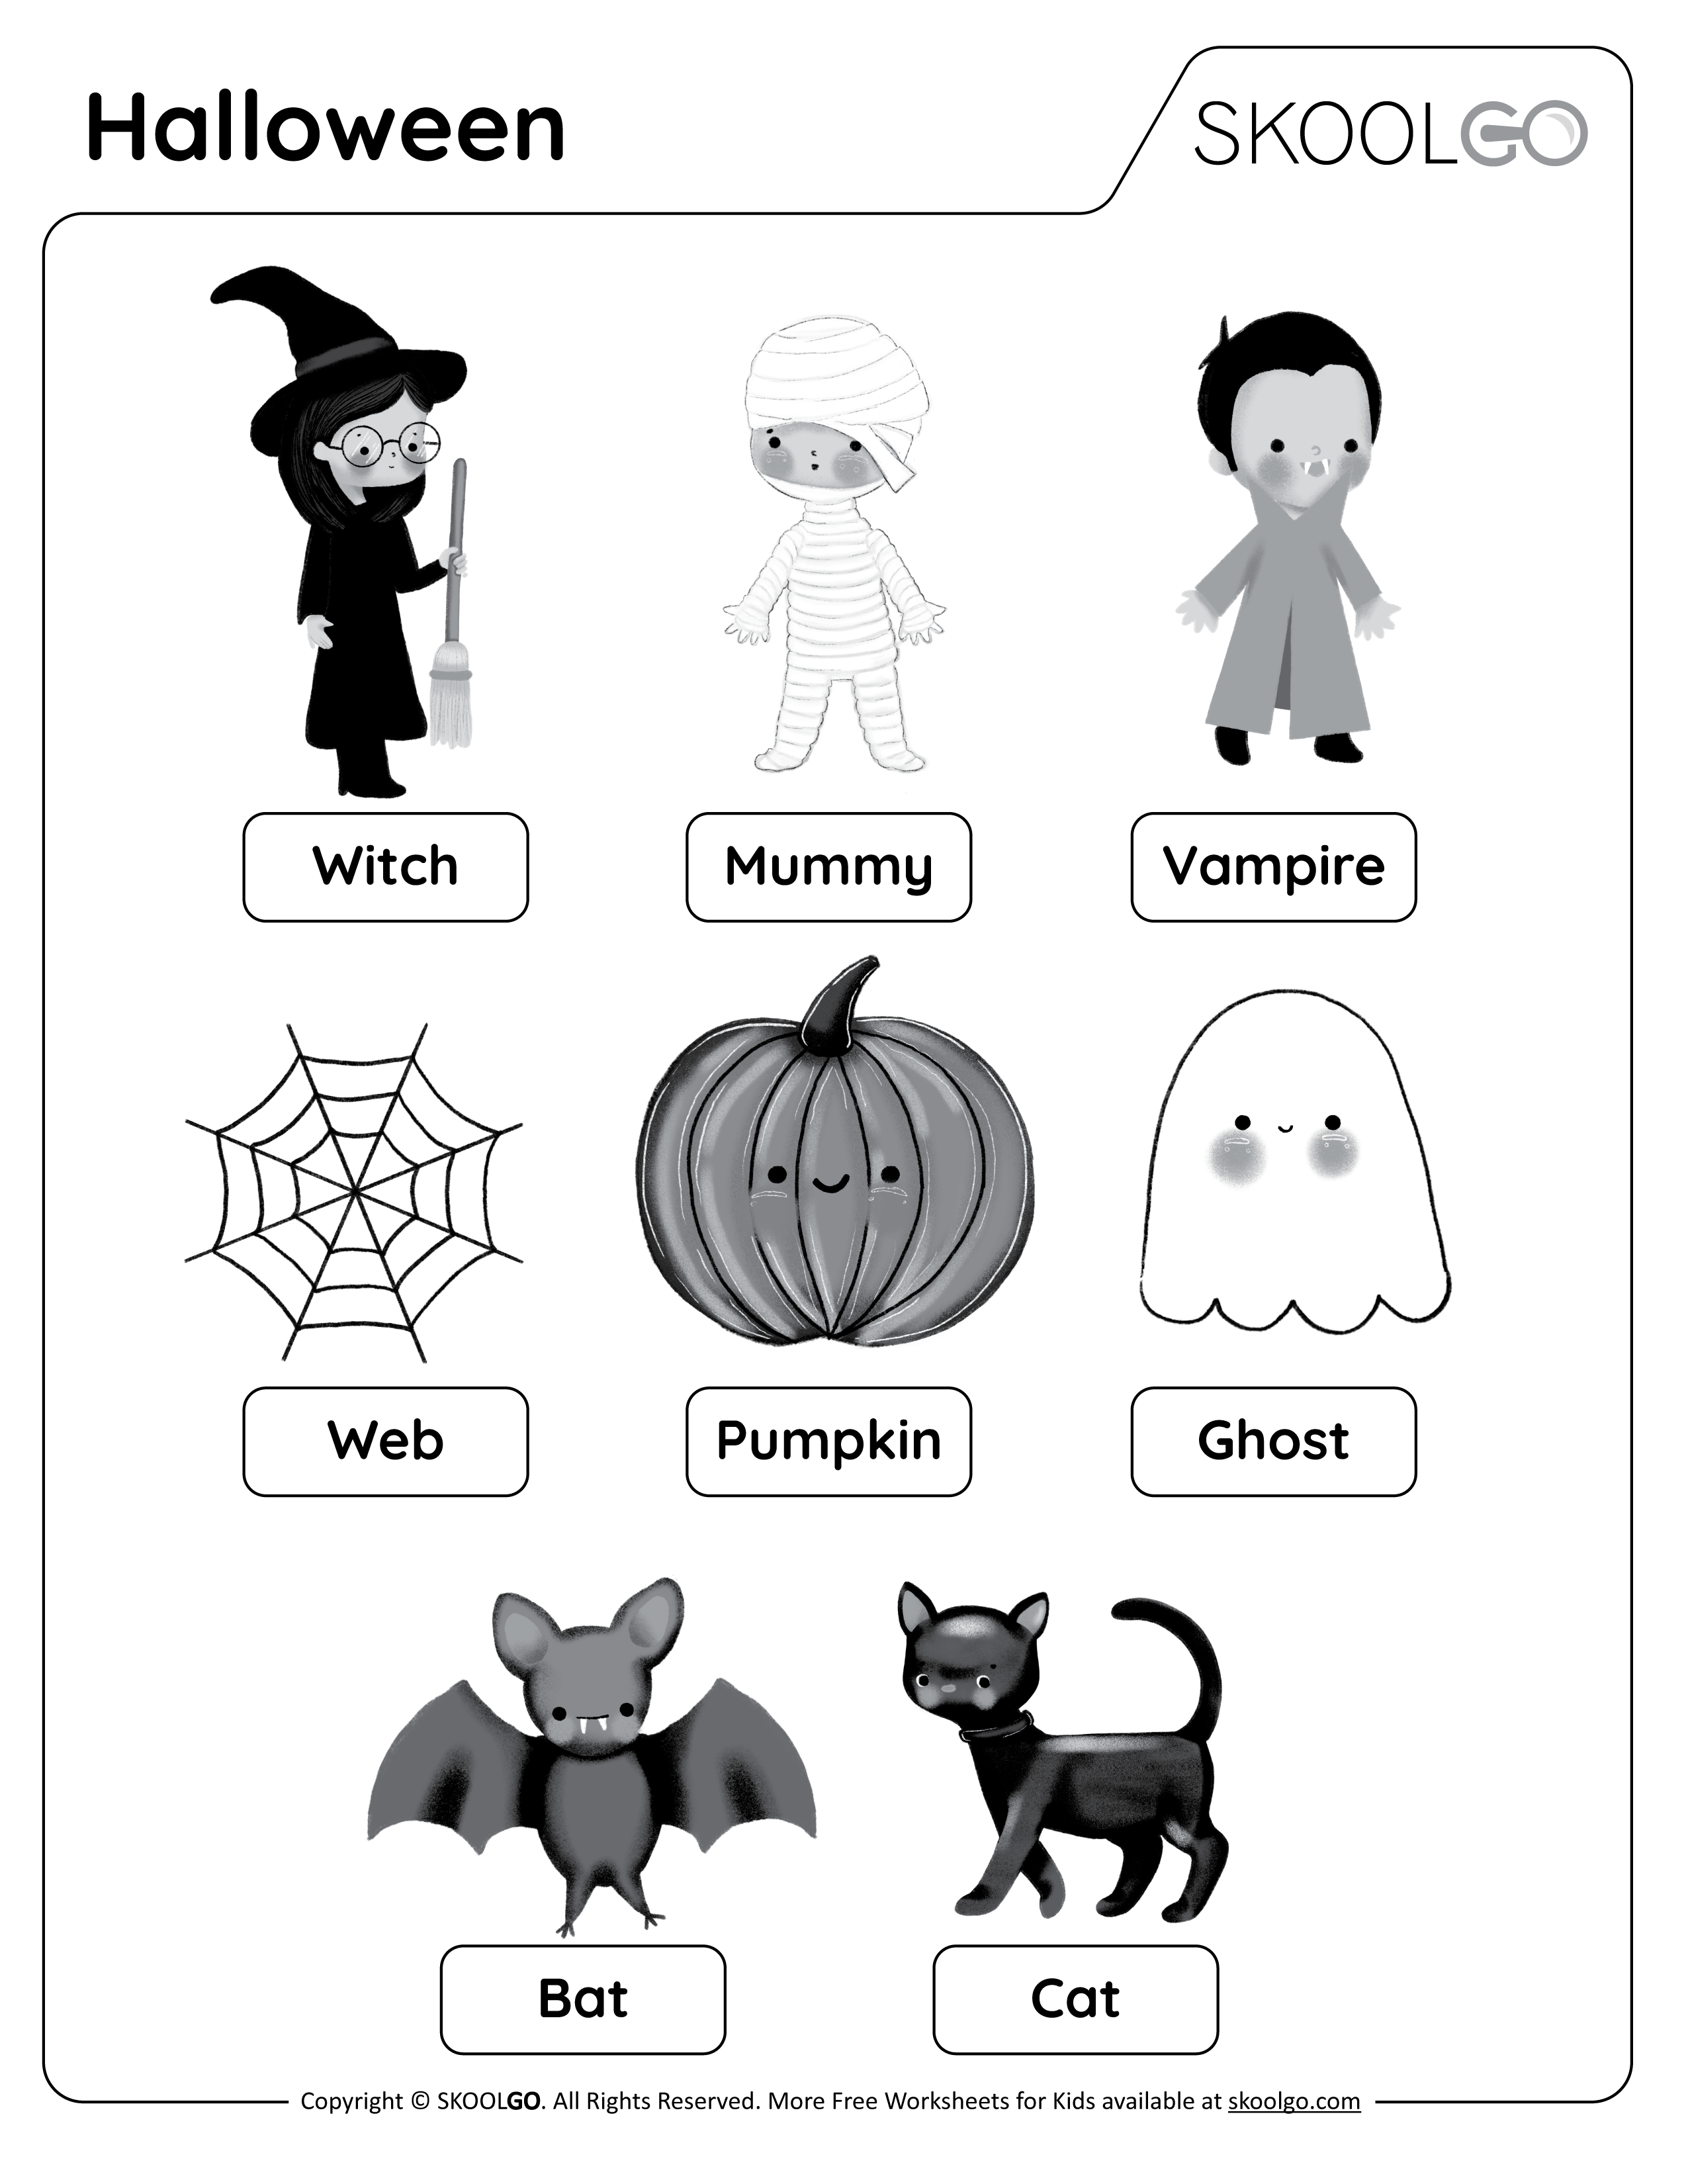 Halloween - Free Black and White Worksheet for Kids